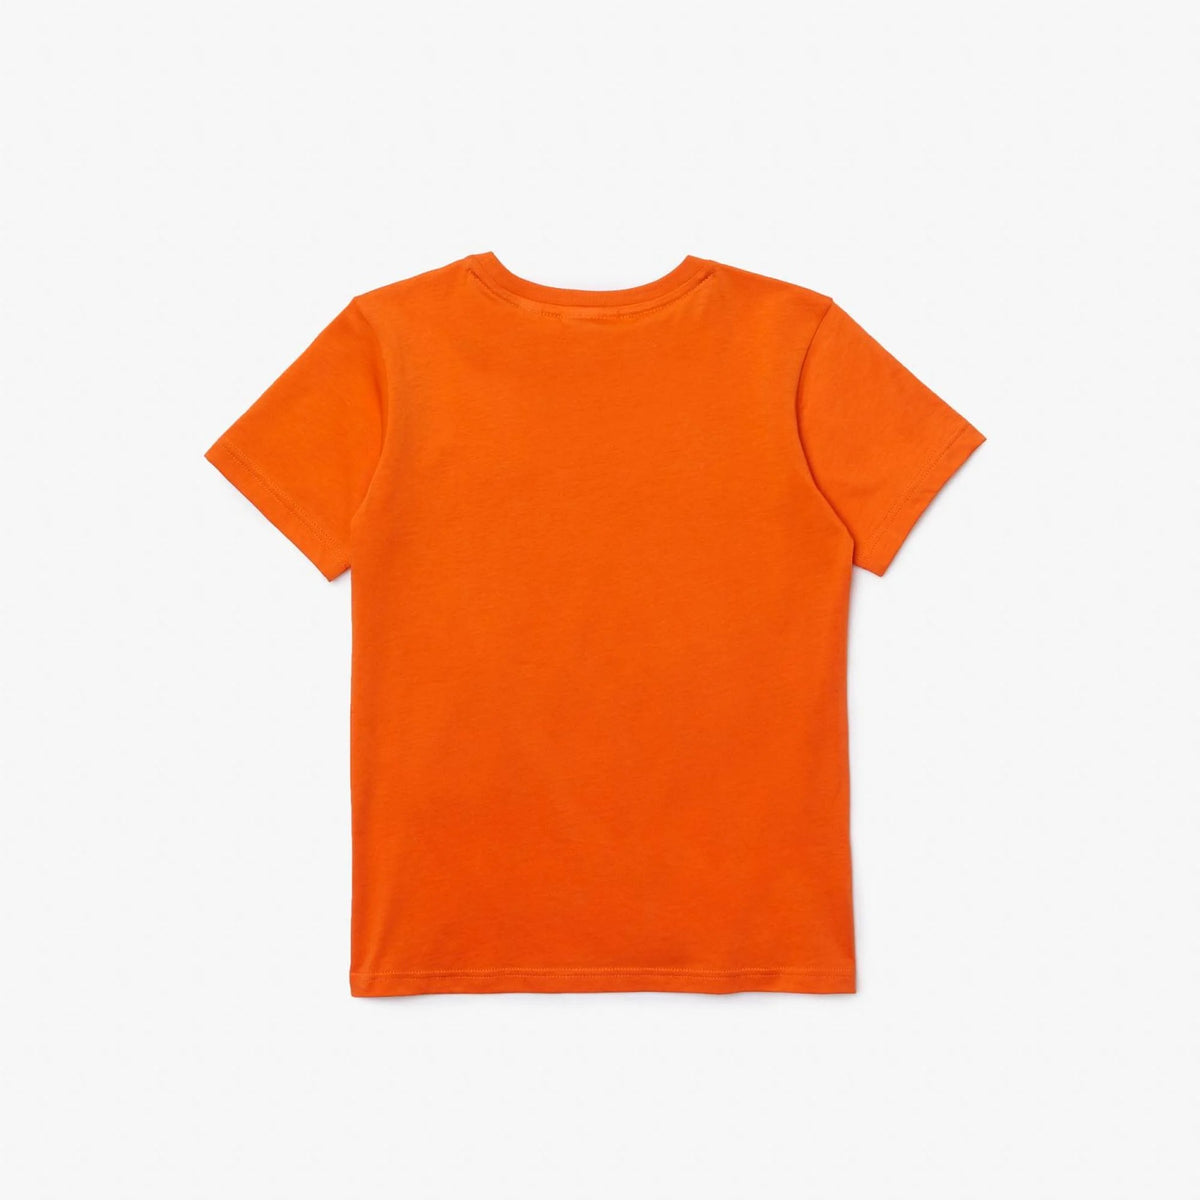 Jungen T-Shirt TJ1442 Orange